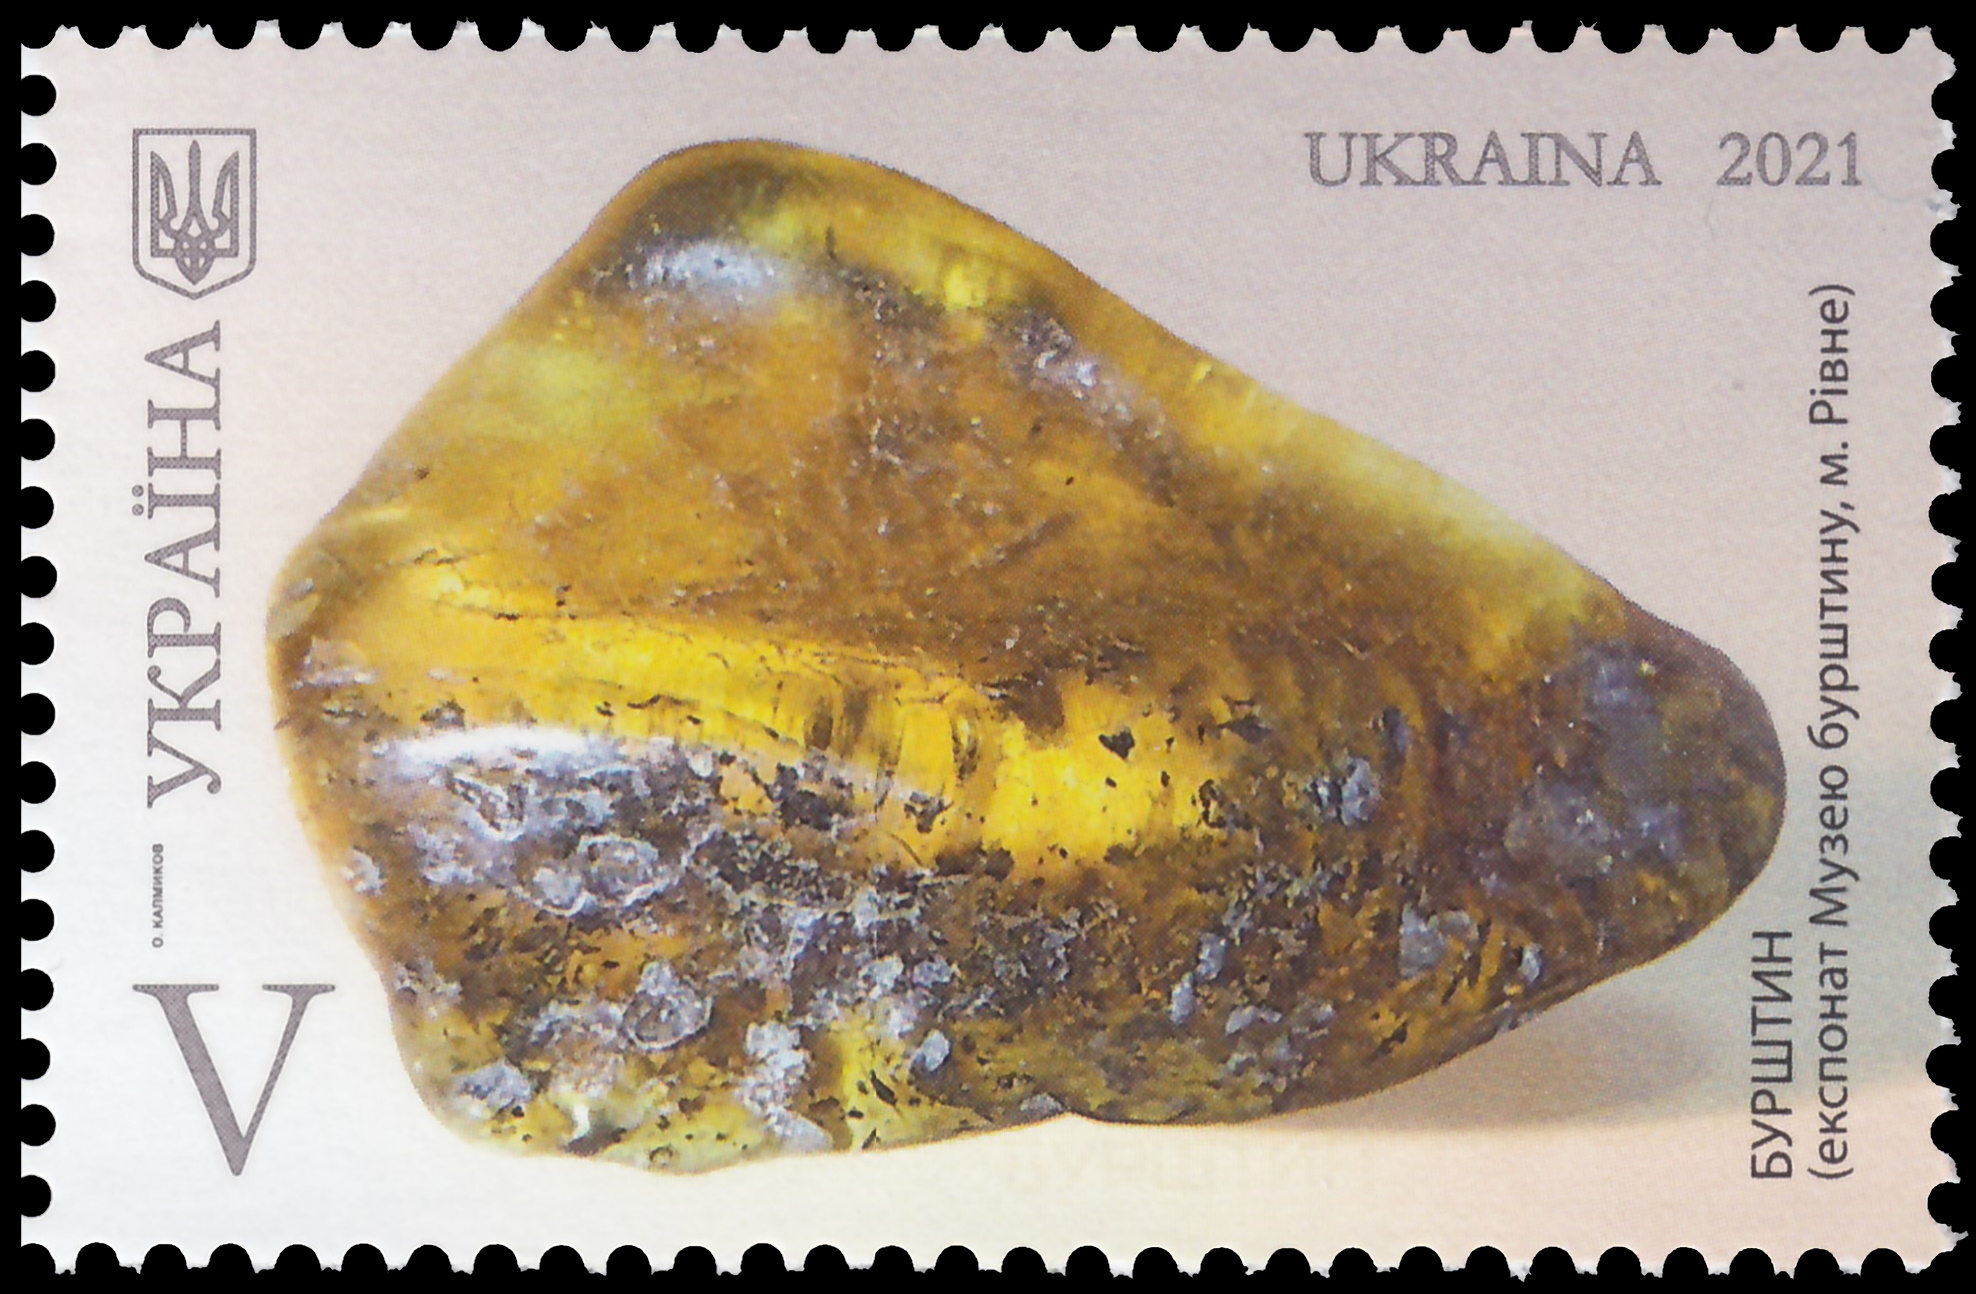 Amber on stamp of Ukraine